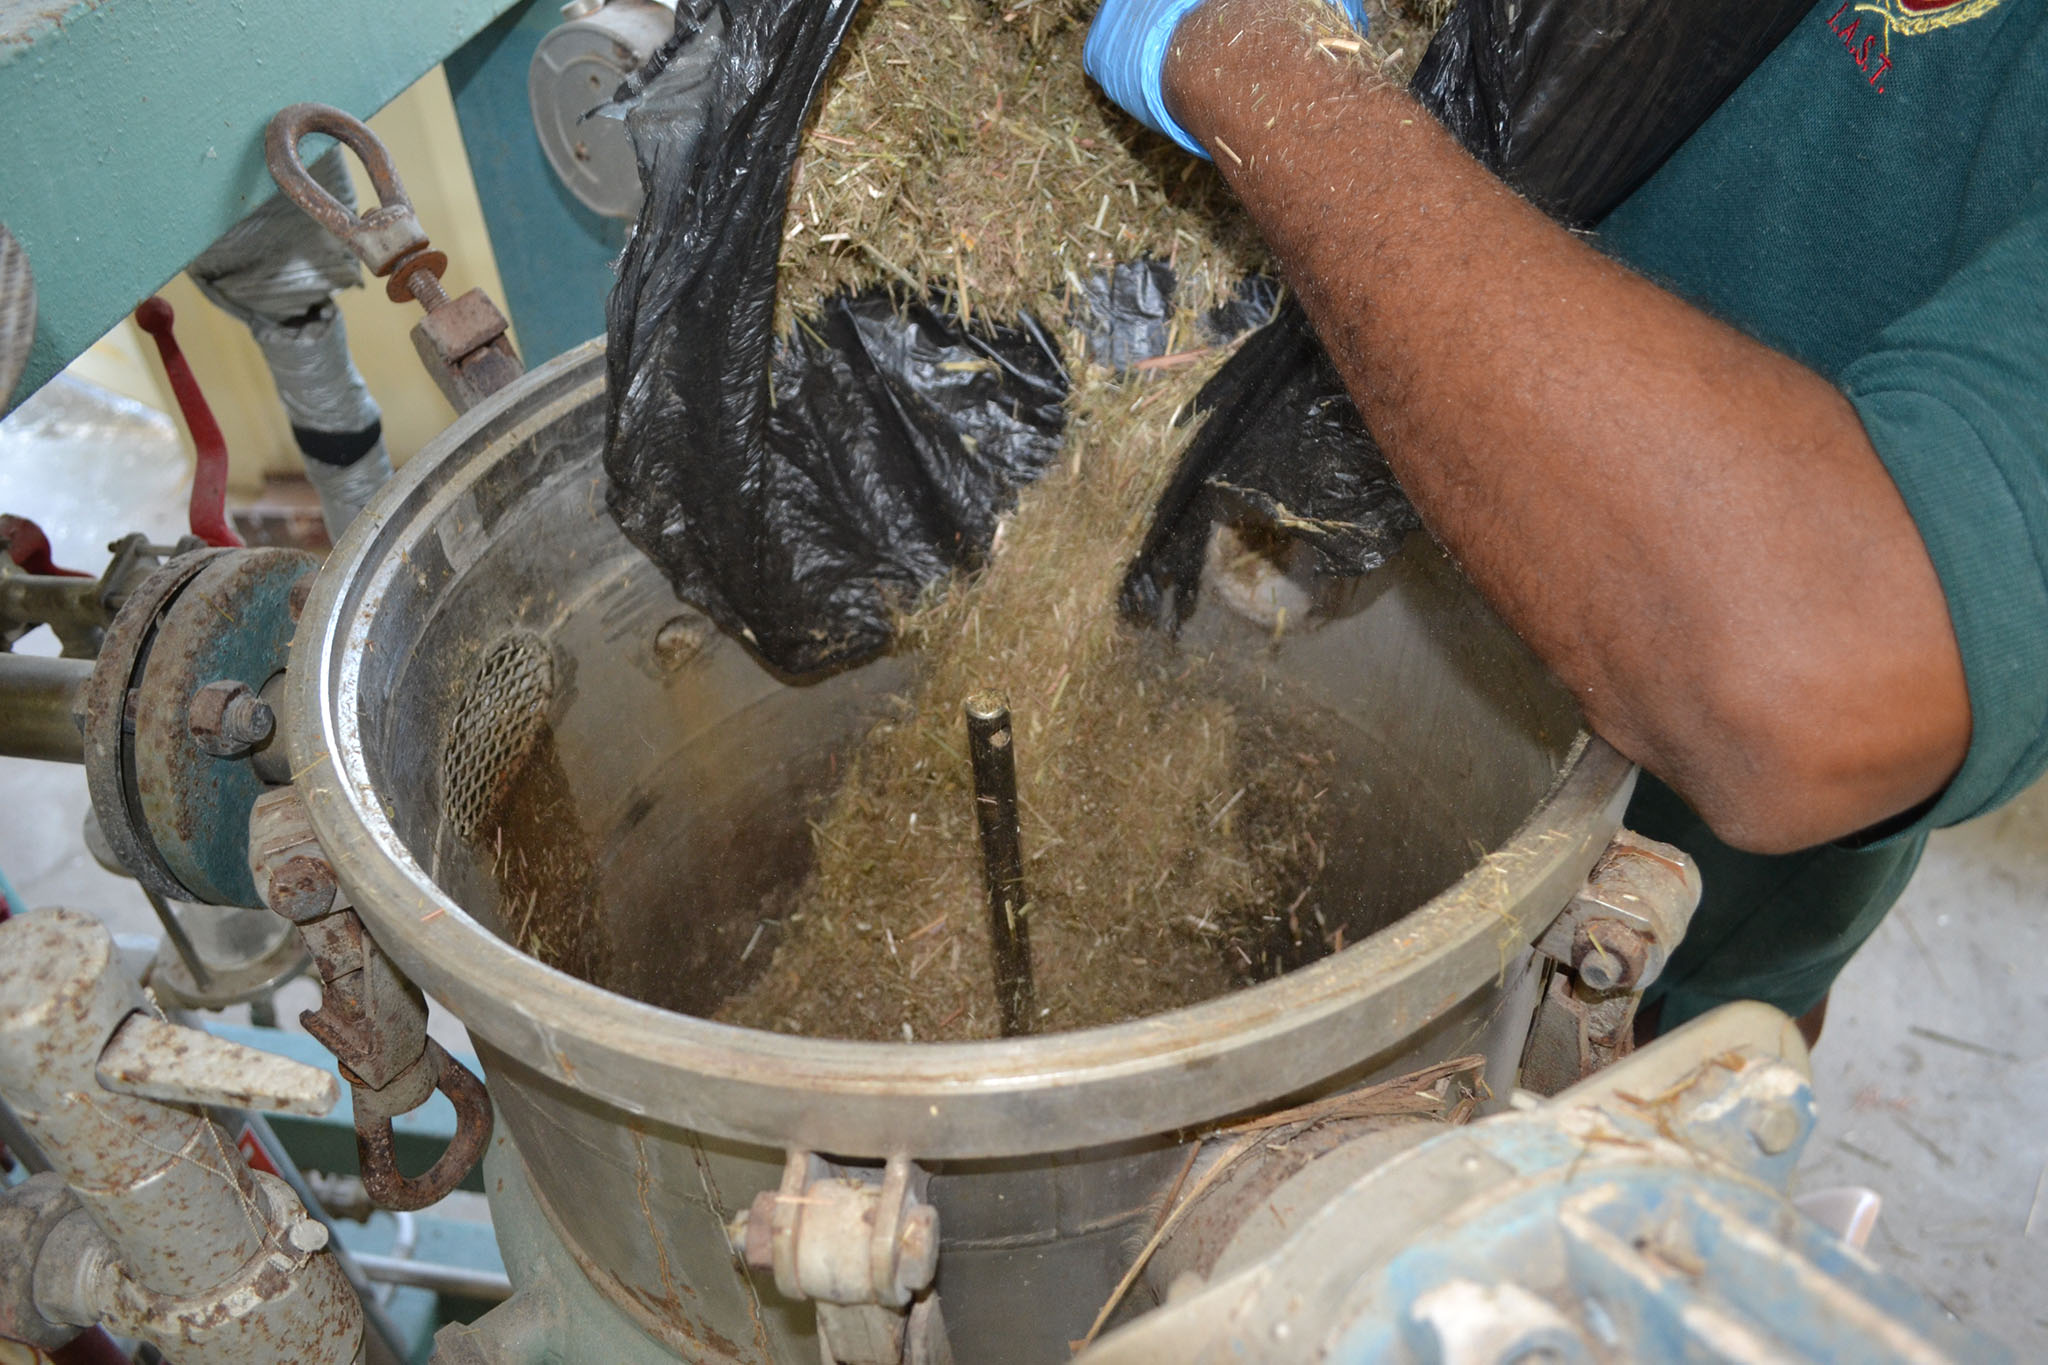 Adding dried lemongrass to the essential oil plant